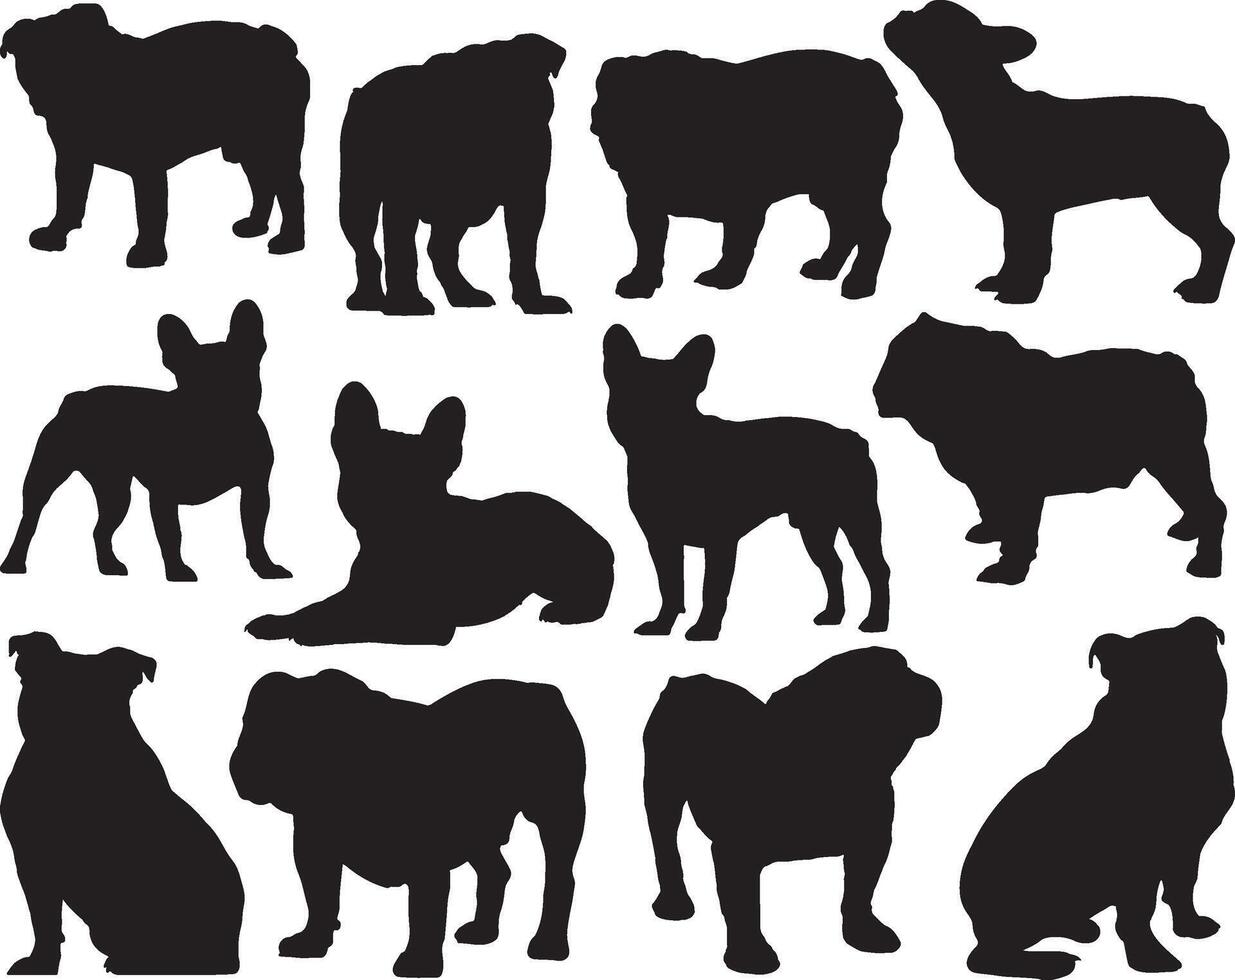 Bulldog silhouette on white background vector